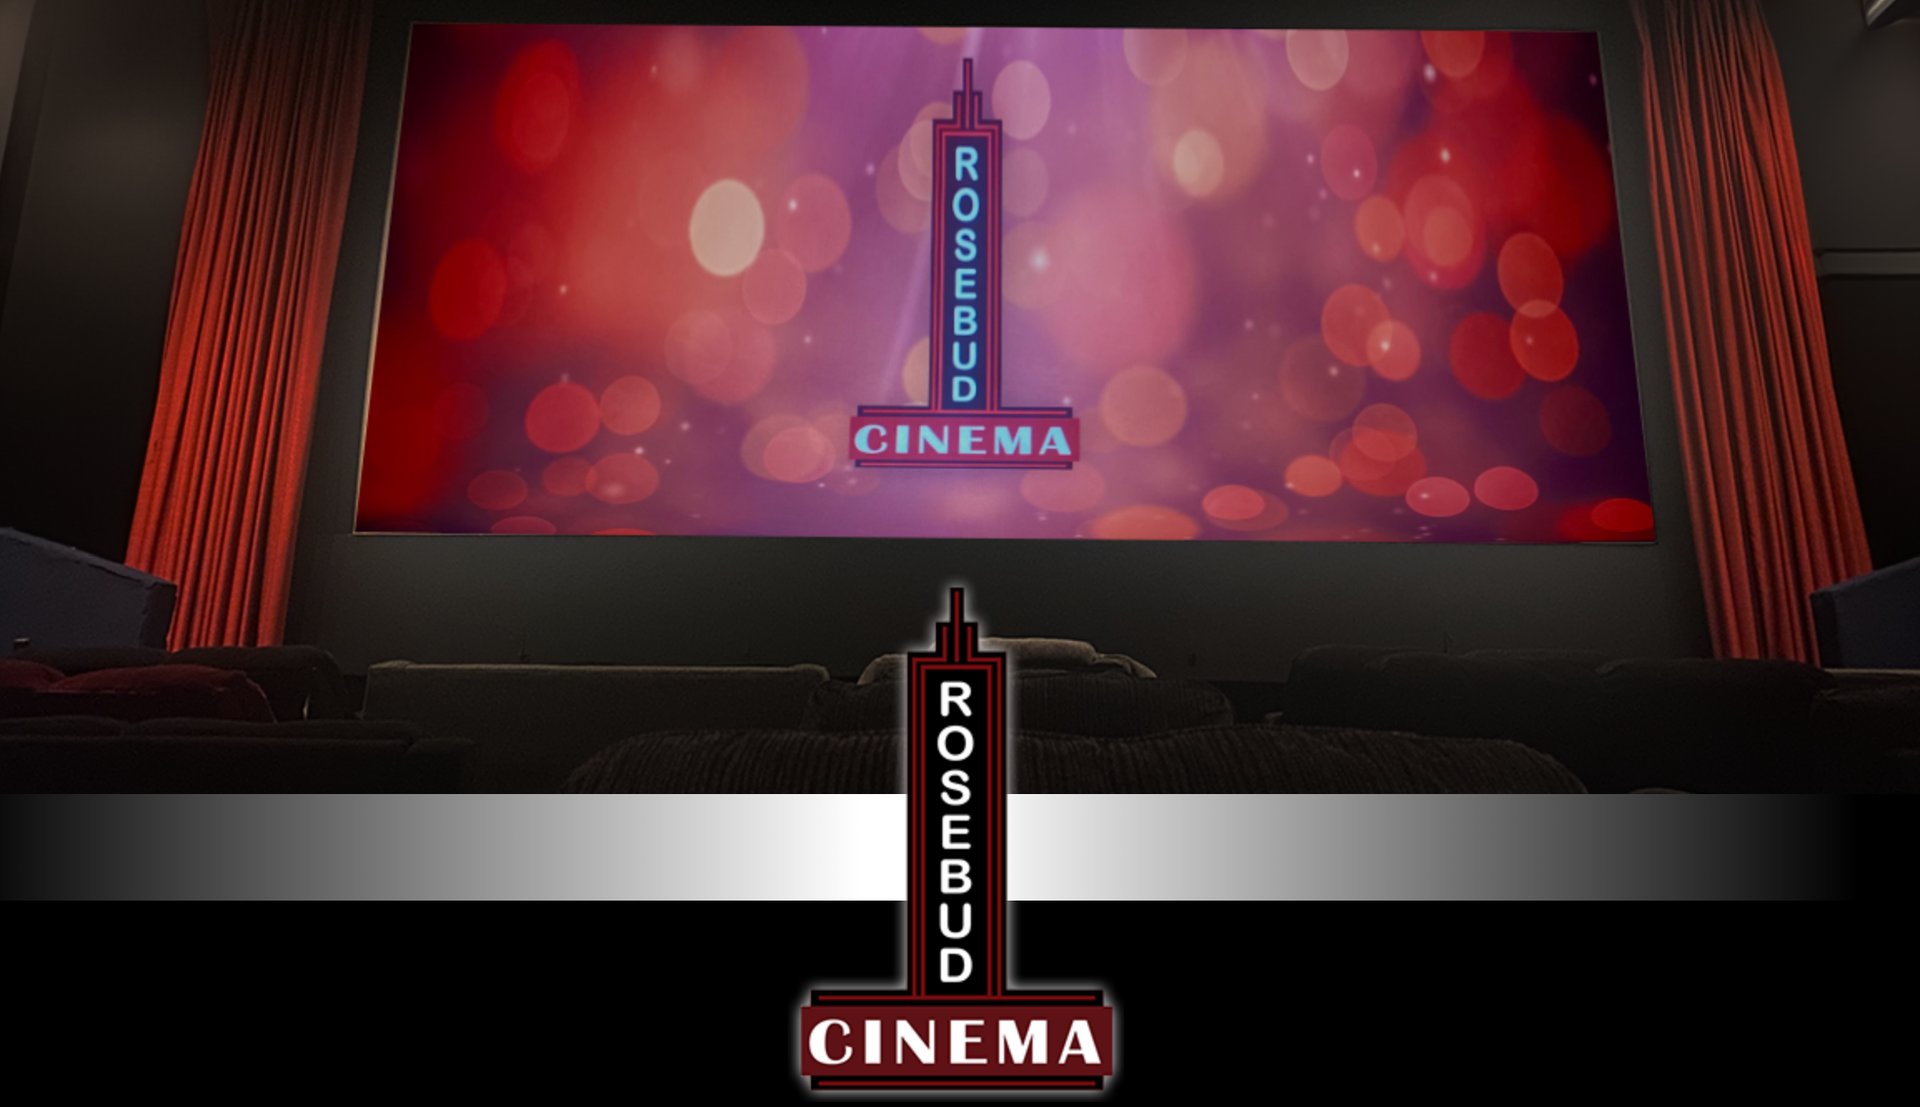 Rosebud Cinema Drafthouse